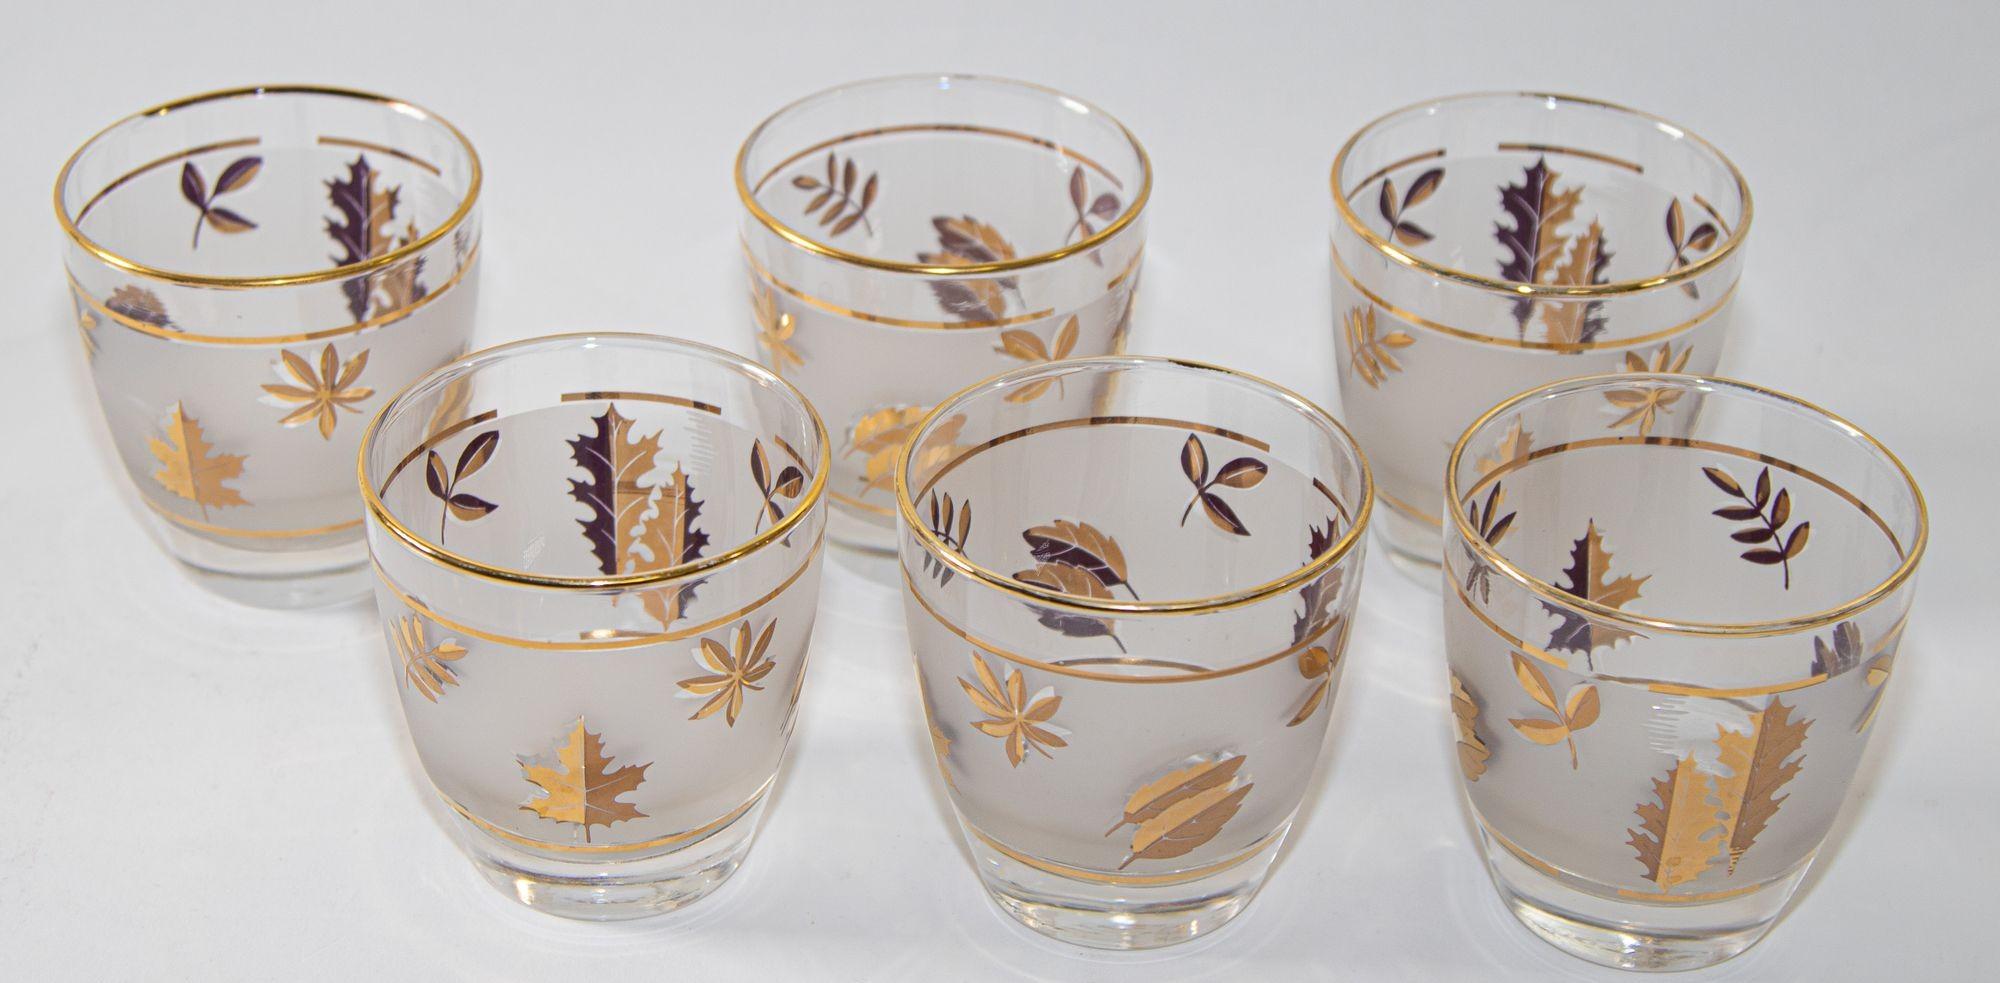 Vintage Libbey Frosted & Golden Foliage Cocktail Glasses, Set of 4 For Sale 1